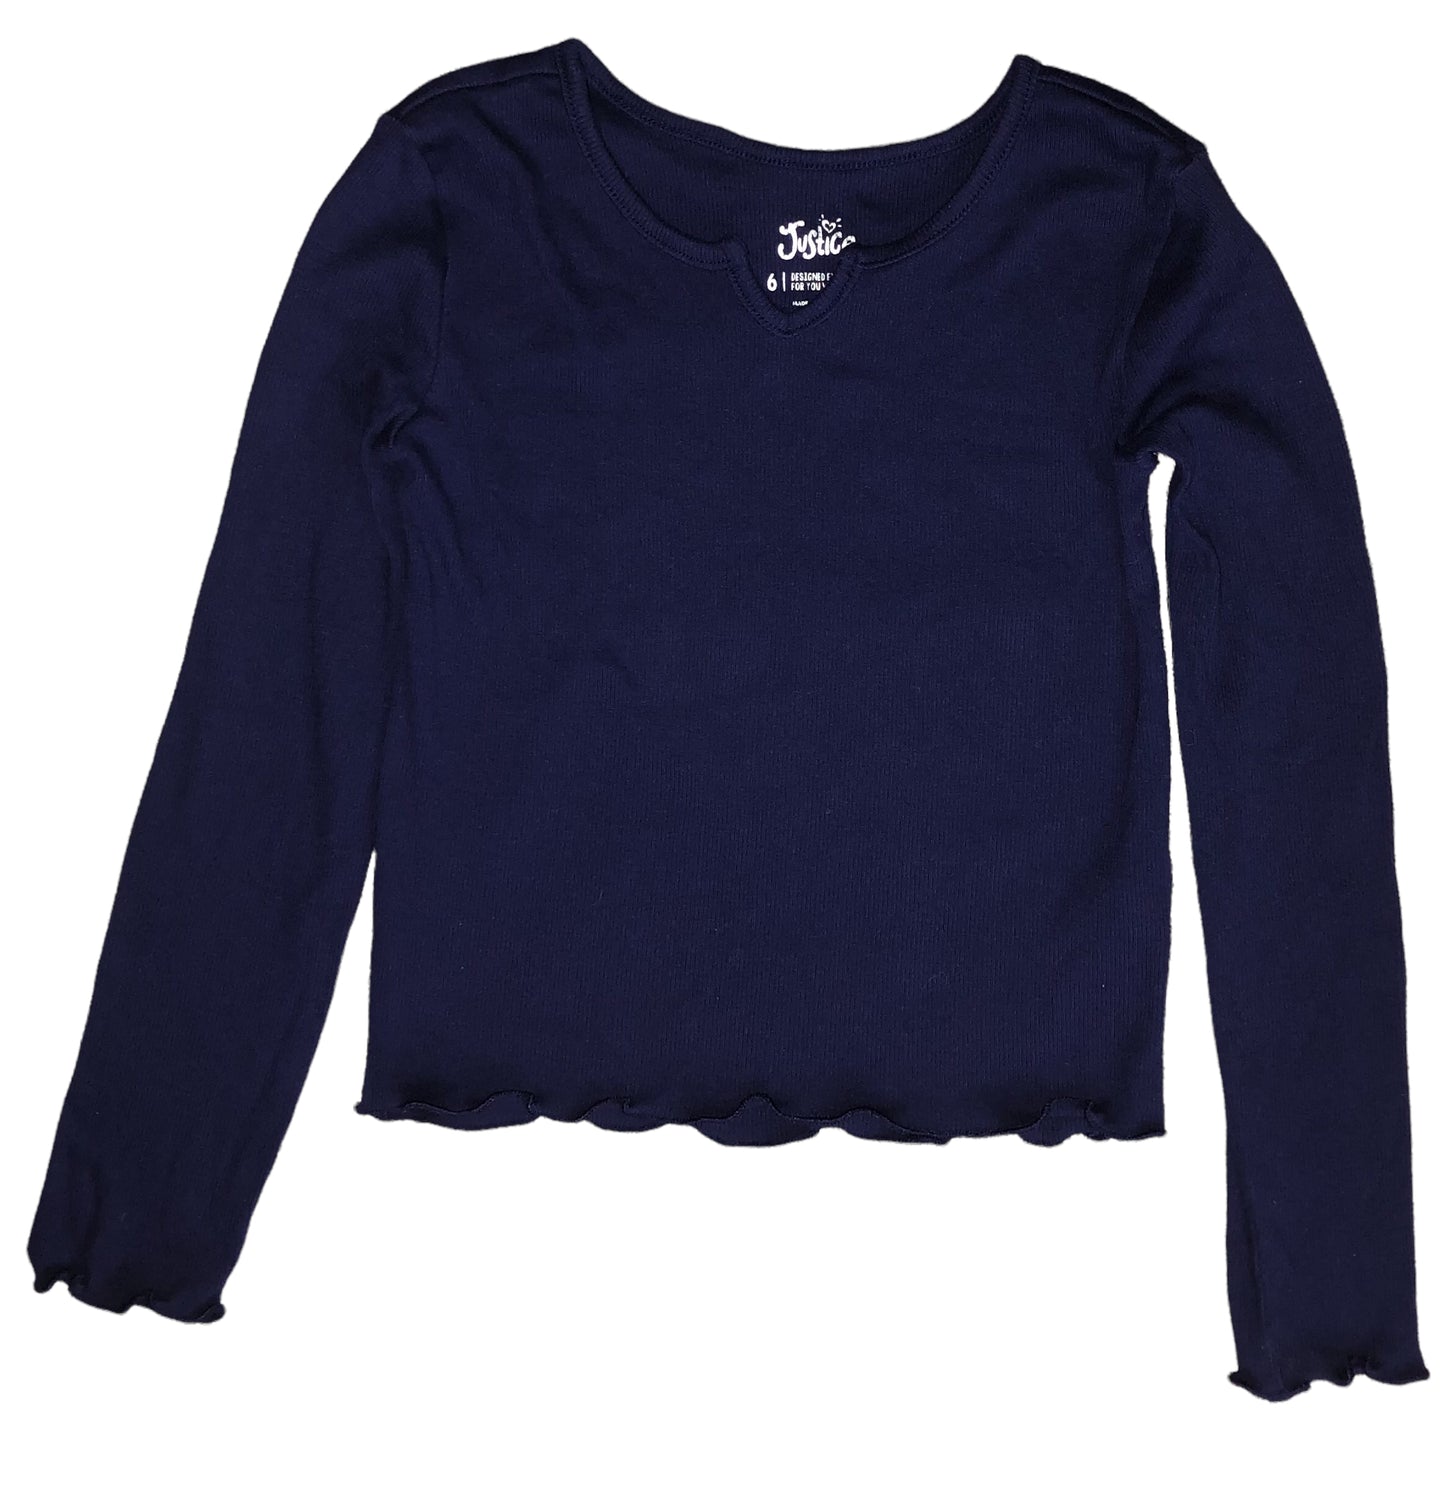 Girl's Long Sleeve Shirt - Variety Sales Etc.